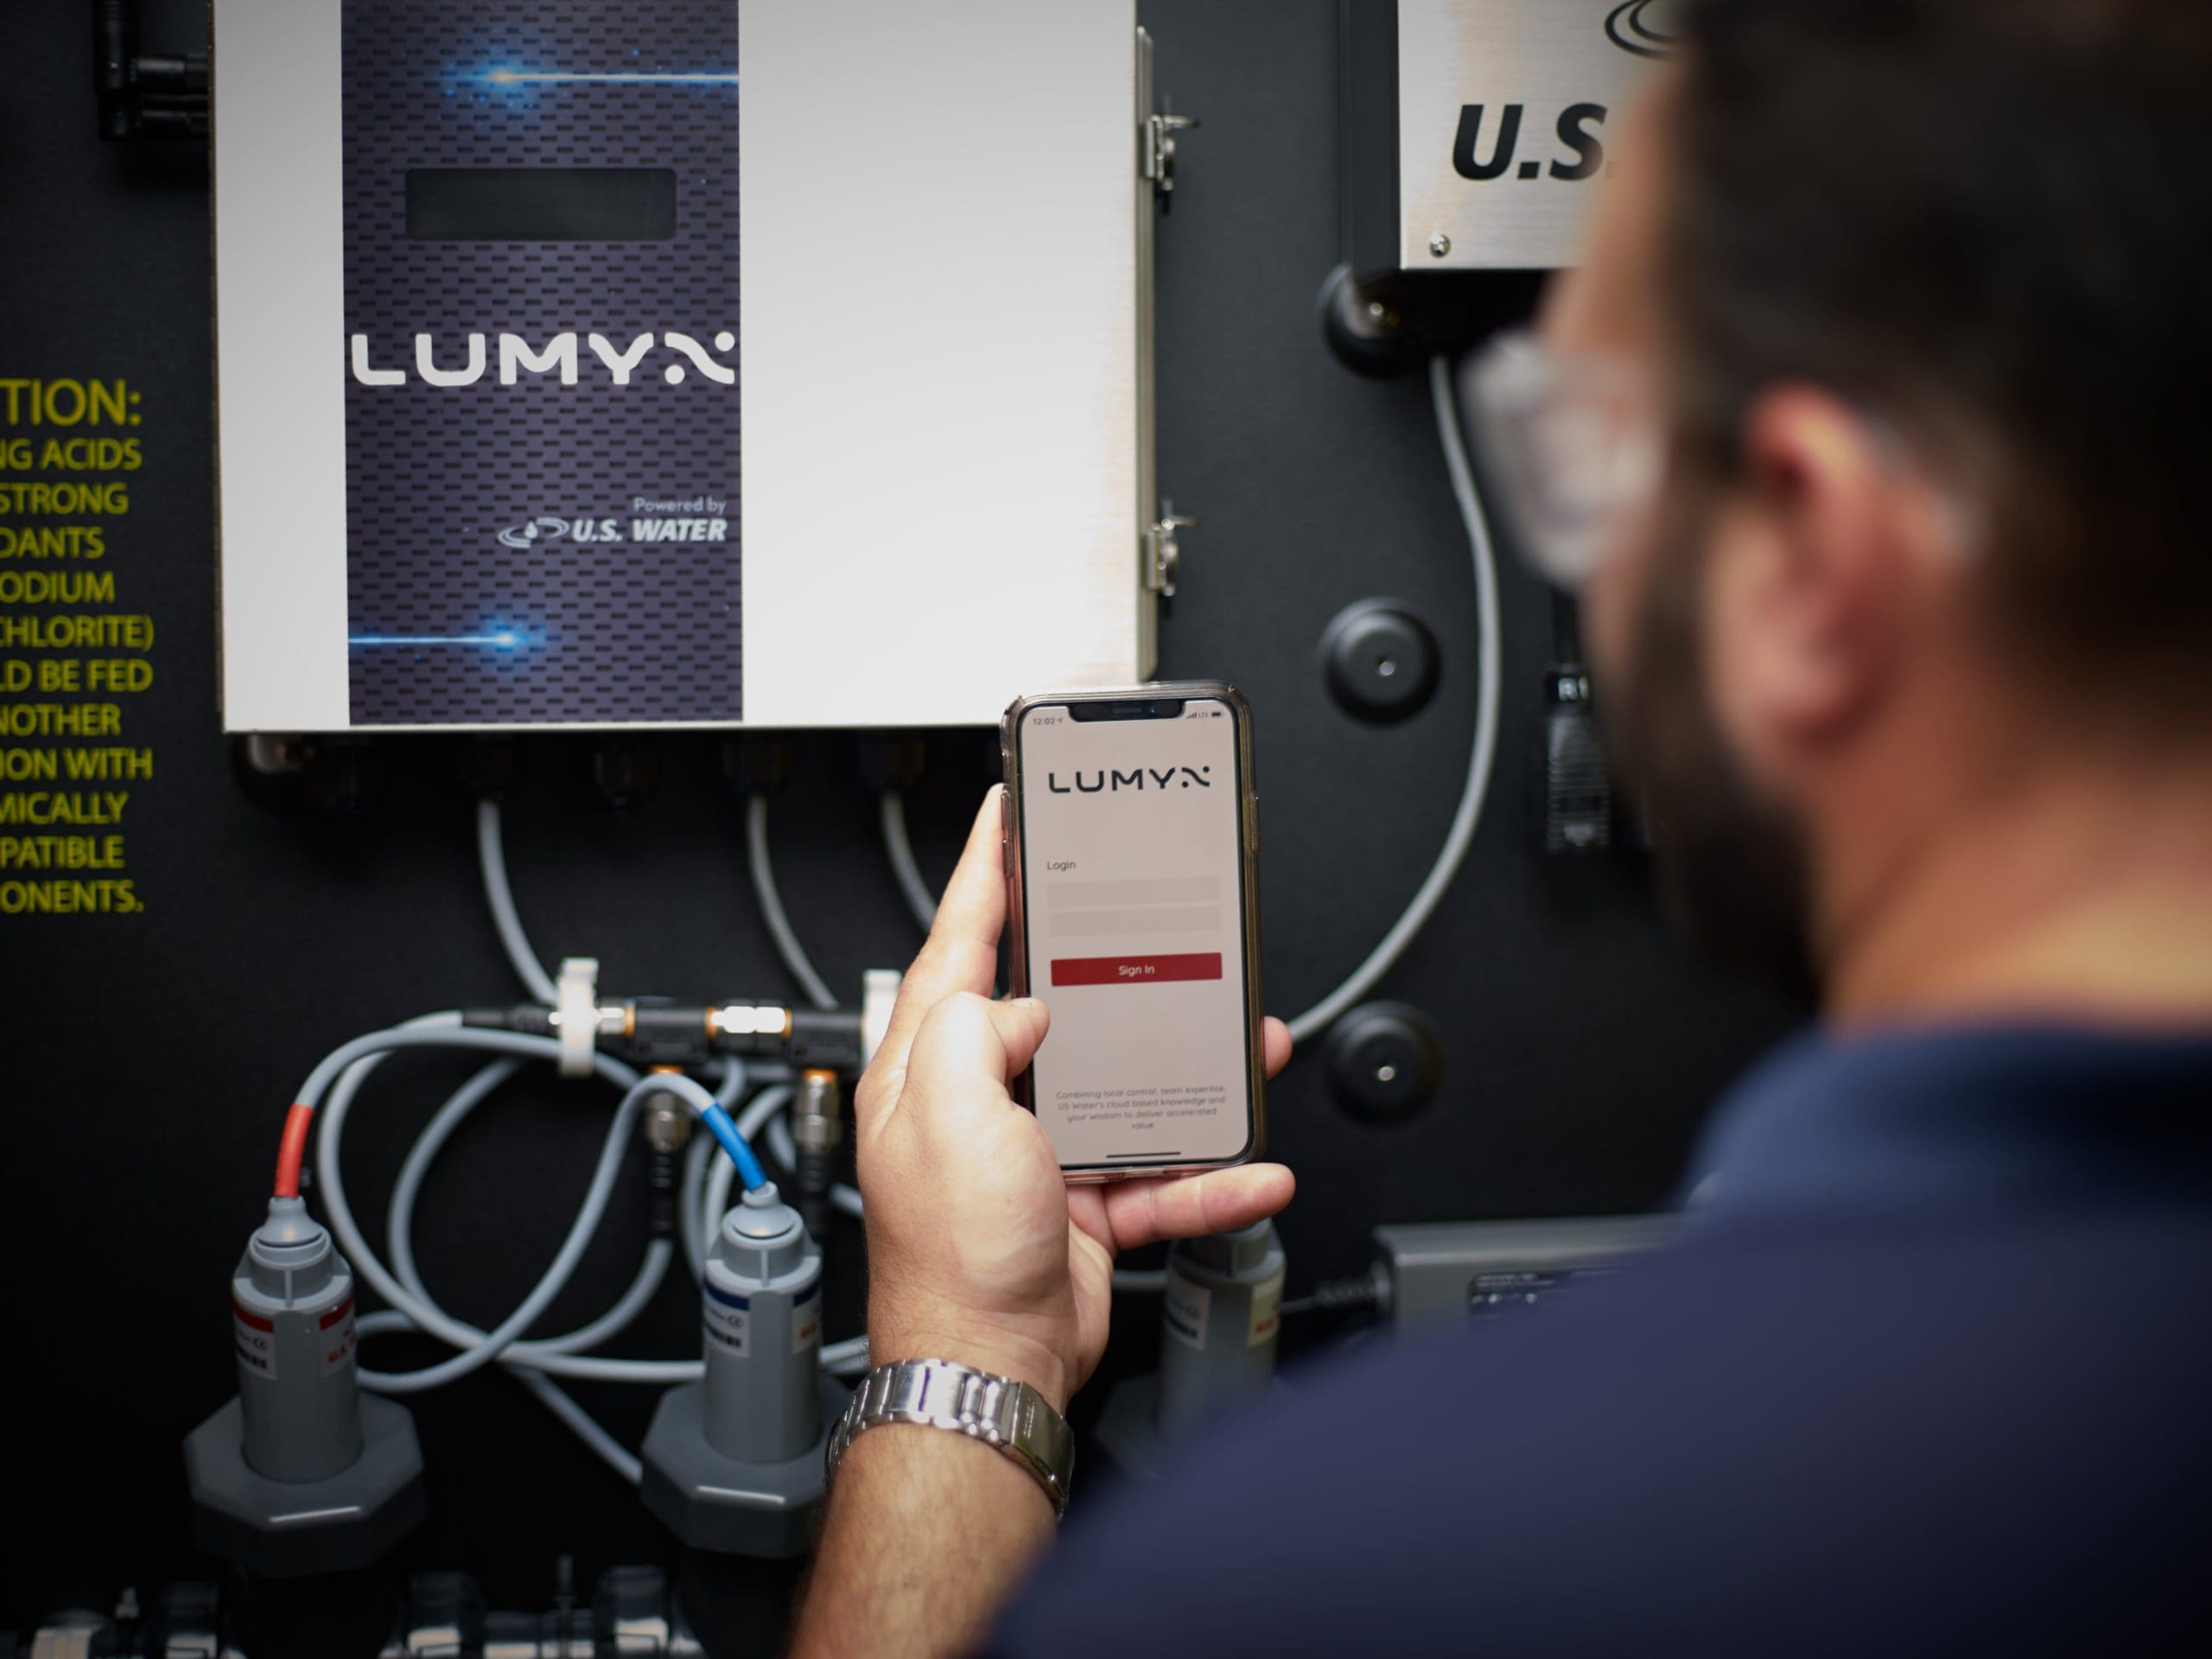 U.S. Water Launches Lumyn Digital Platform